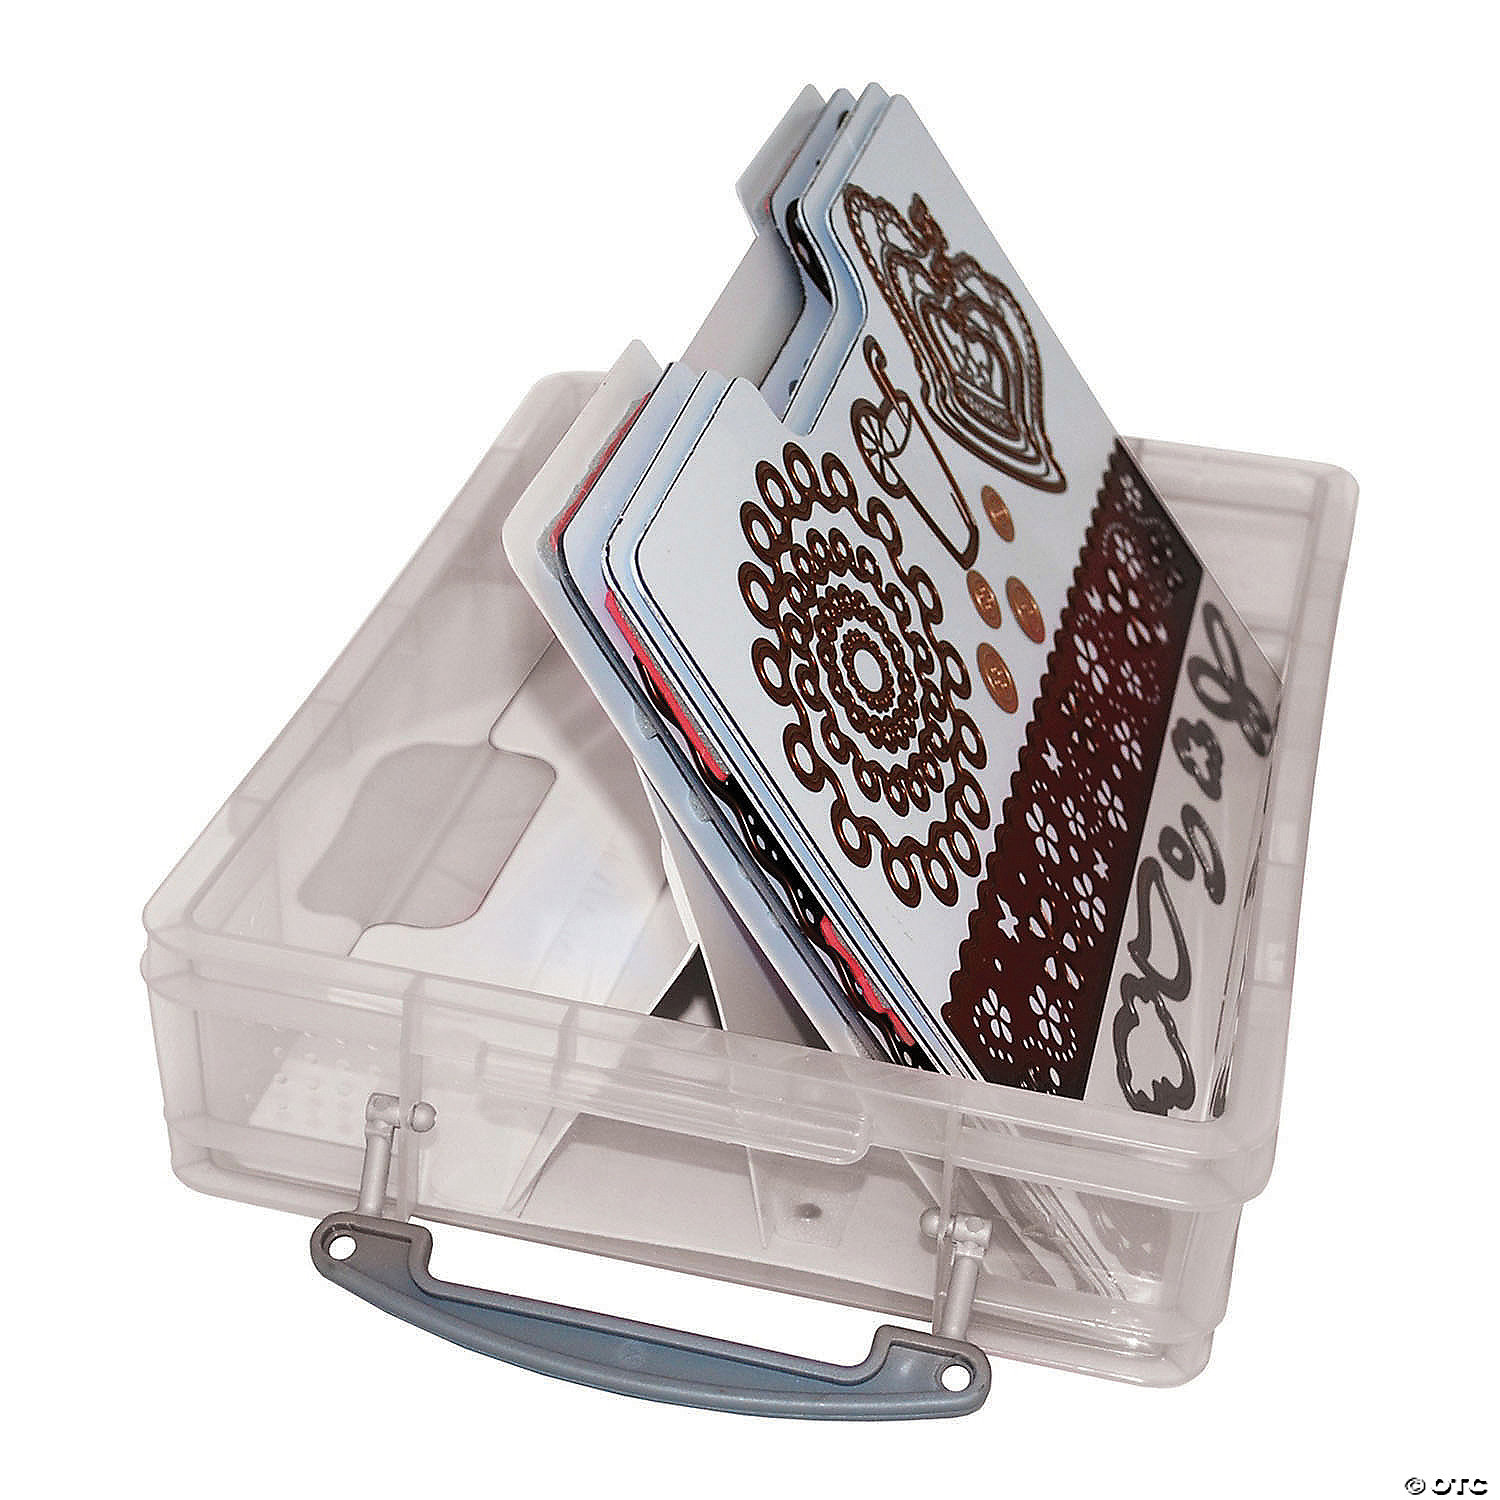 Avery Elle - Stamp & Die Storage Pockets - Extra Large (pkg of 50)